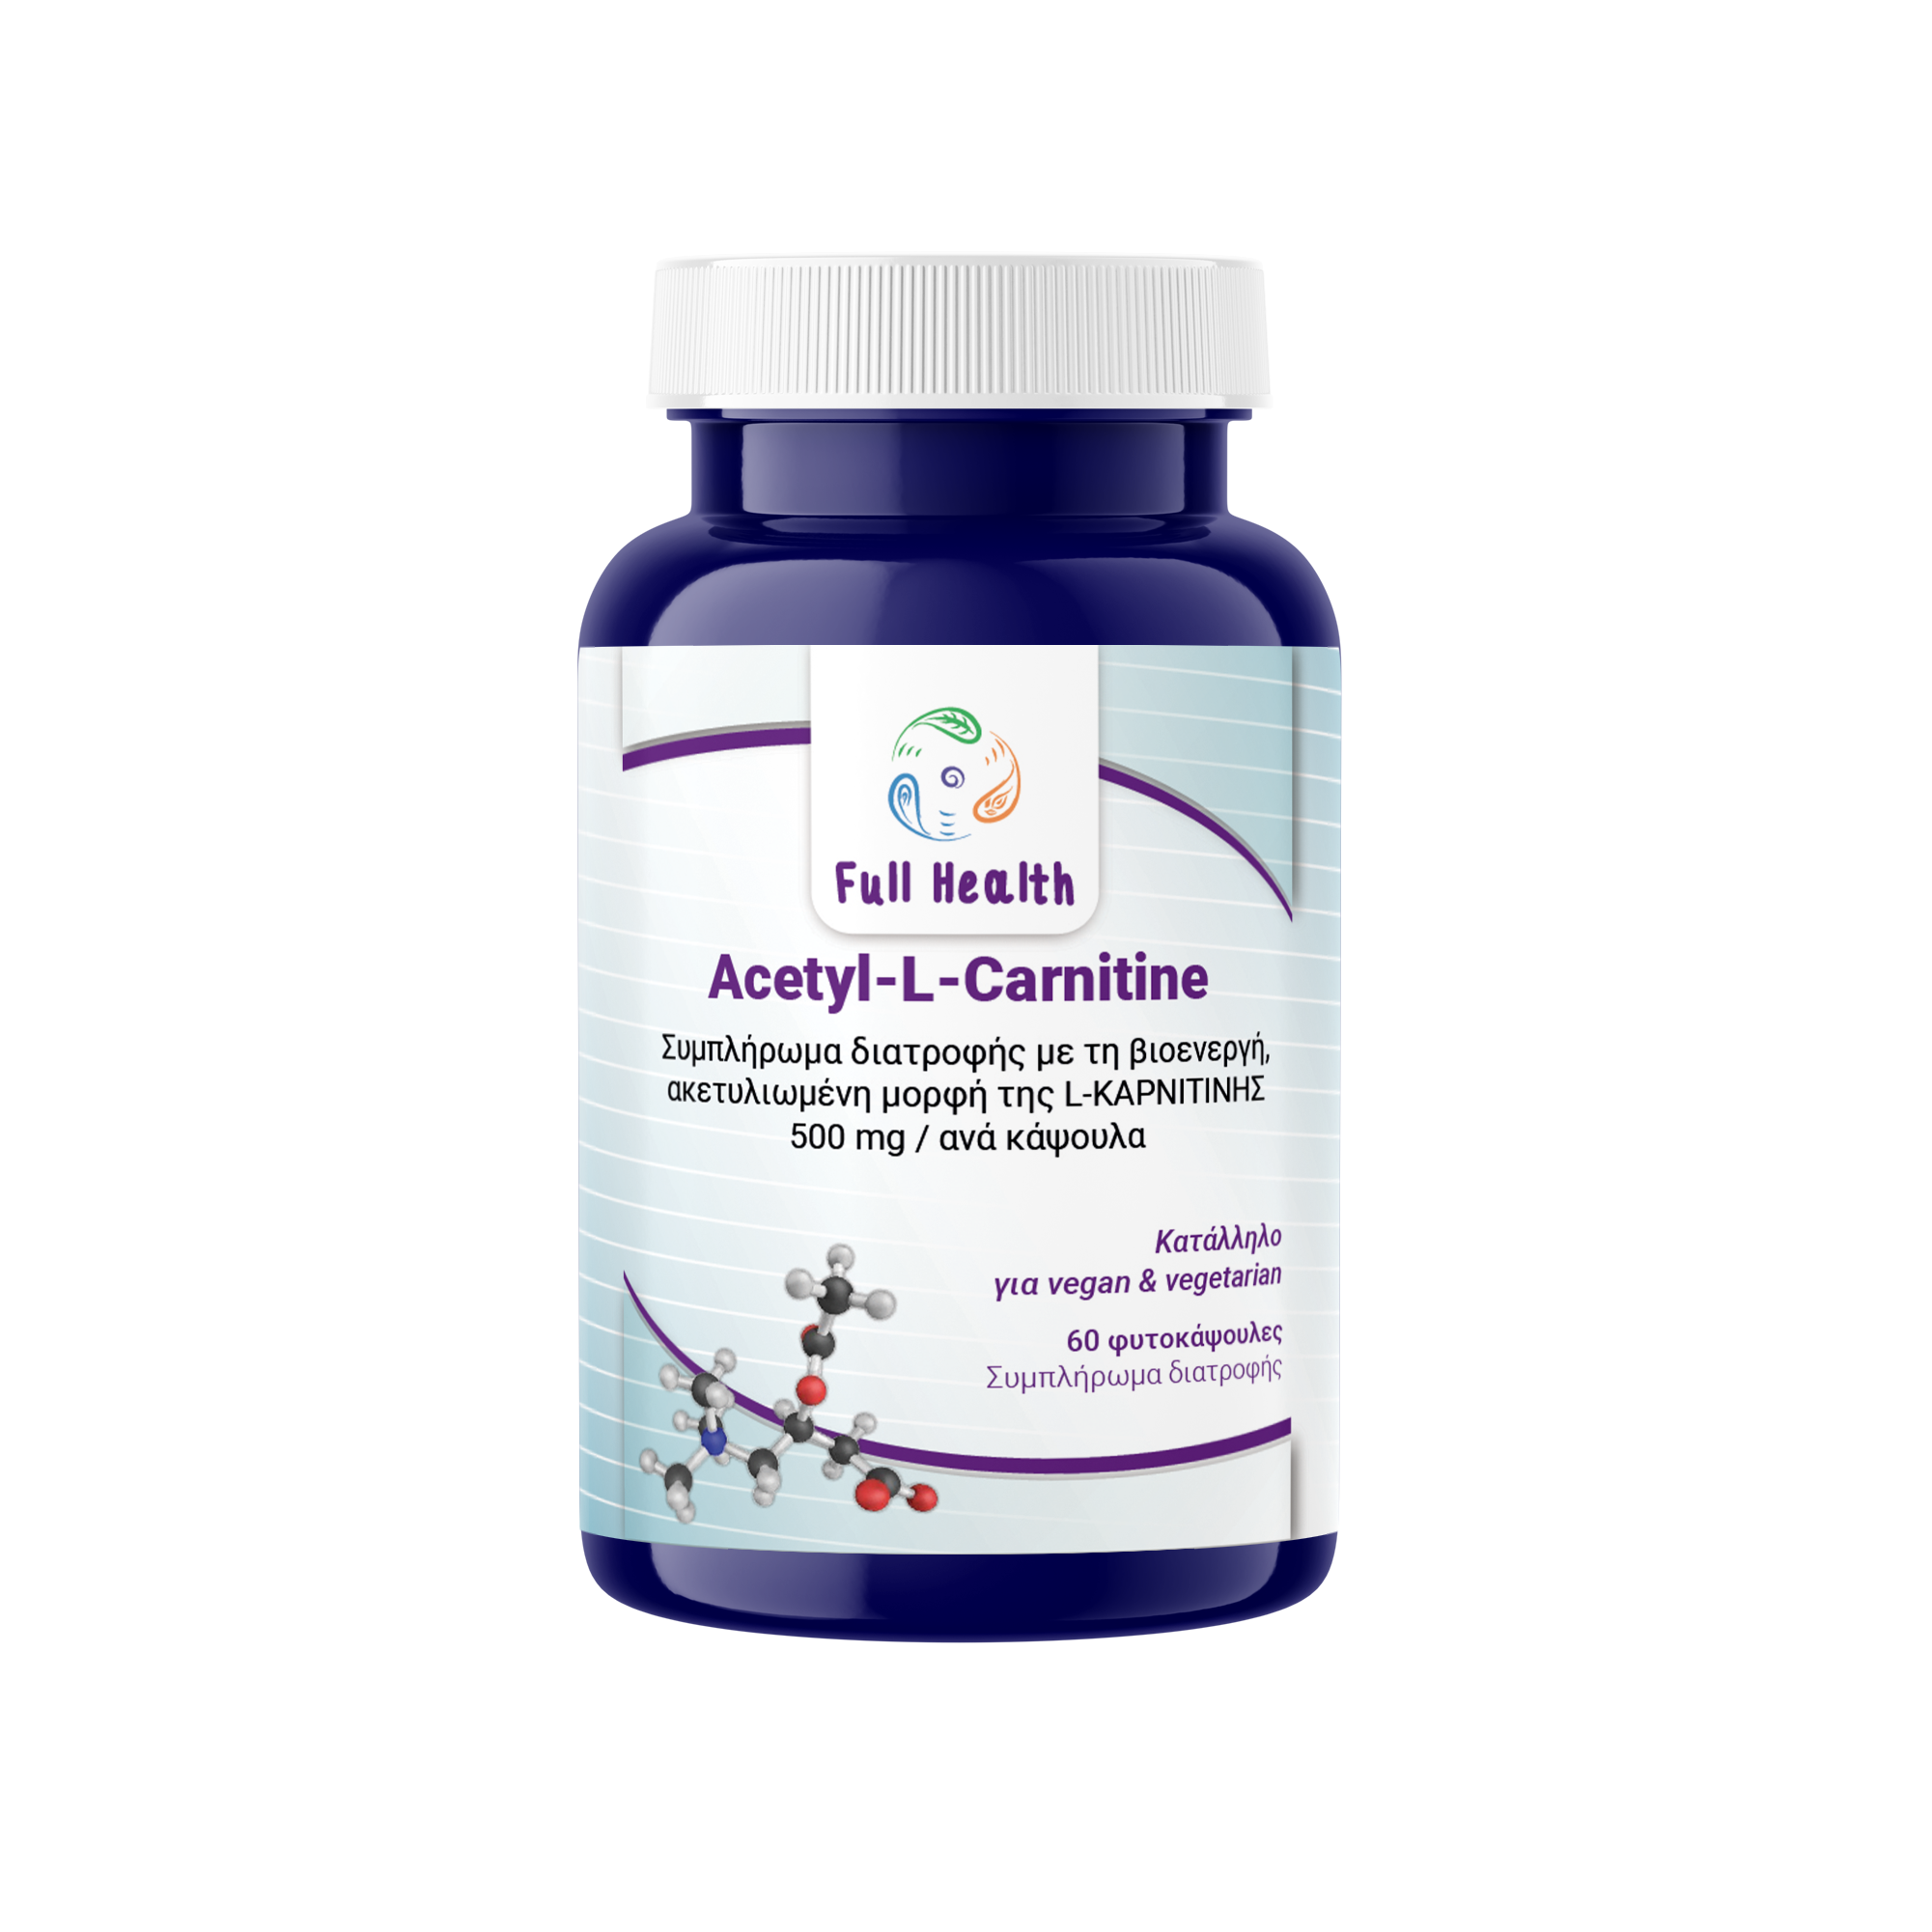 Full Health Acetyl L Carnitine 500mg 60 Caps (Συμπλήρωμα διατροφής με Ακέτυλο-L-Καρνιτίνη (ALC) την ακετυλιωμένη, βιοενεργή μορφή της καρνιτίνης)